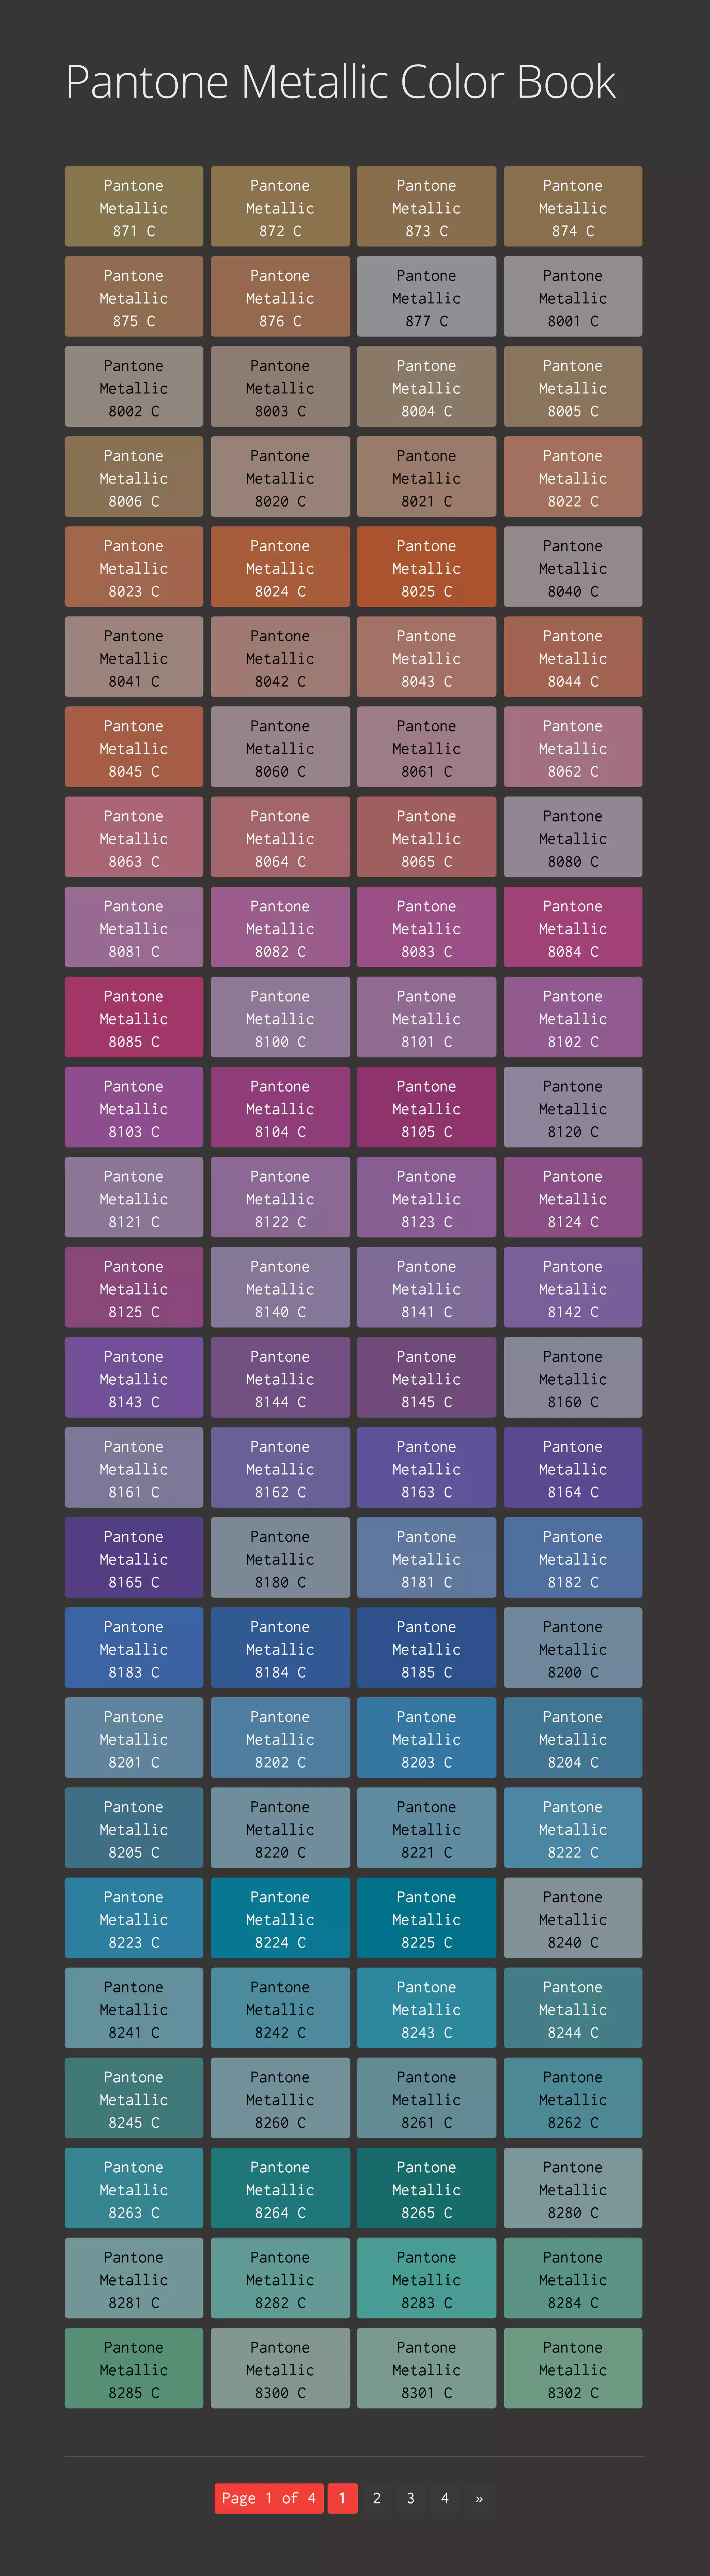 Pantone-Metallic-Color-Chart-1